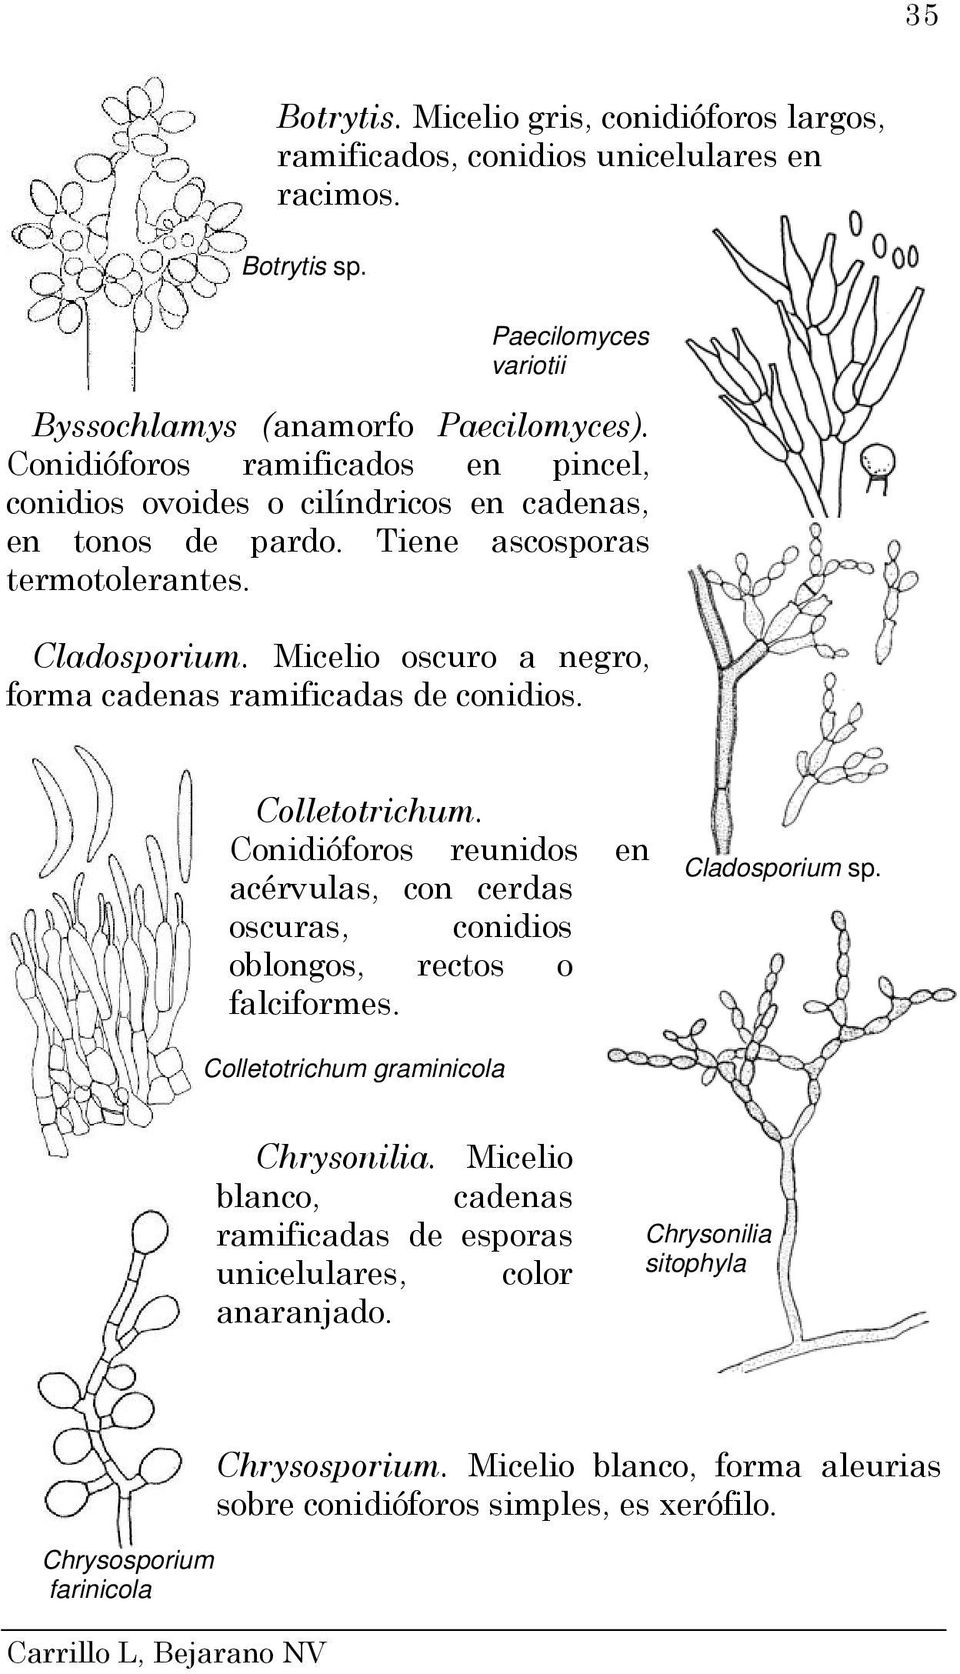 Micelio oscuro a negro, forma cadenas ramificadas de conidios. Colletotrichum. Conidióforos reunidos en acérvulas, con cerdas oscuras, conidios oblongos, rectos o falciformes.